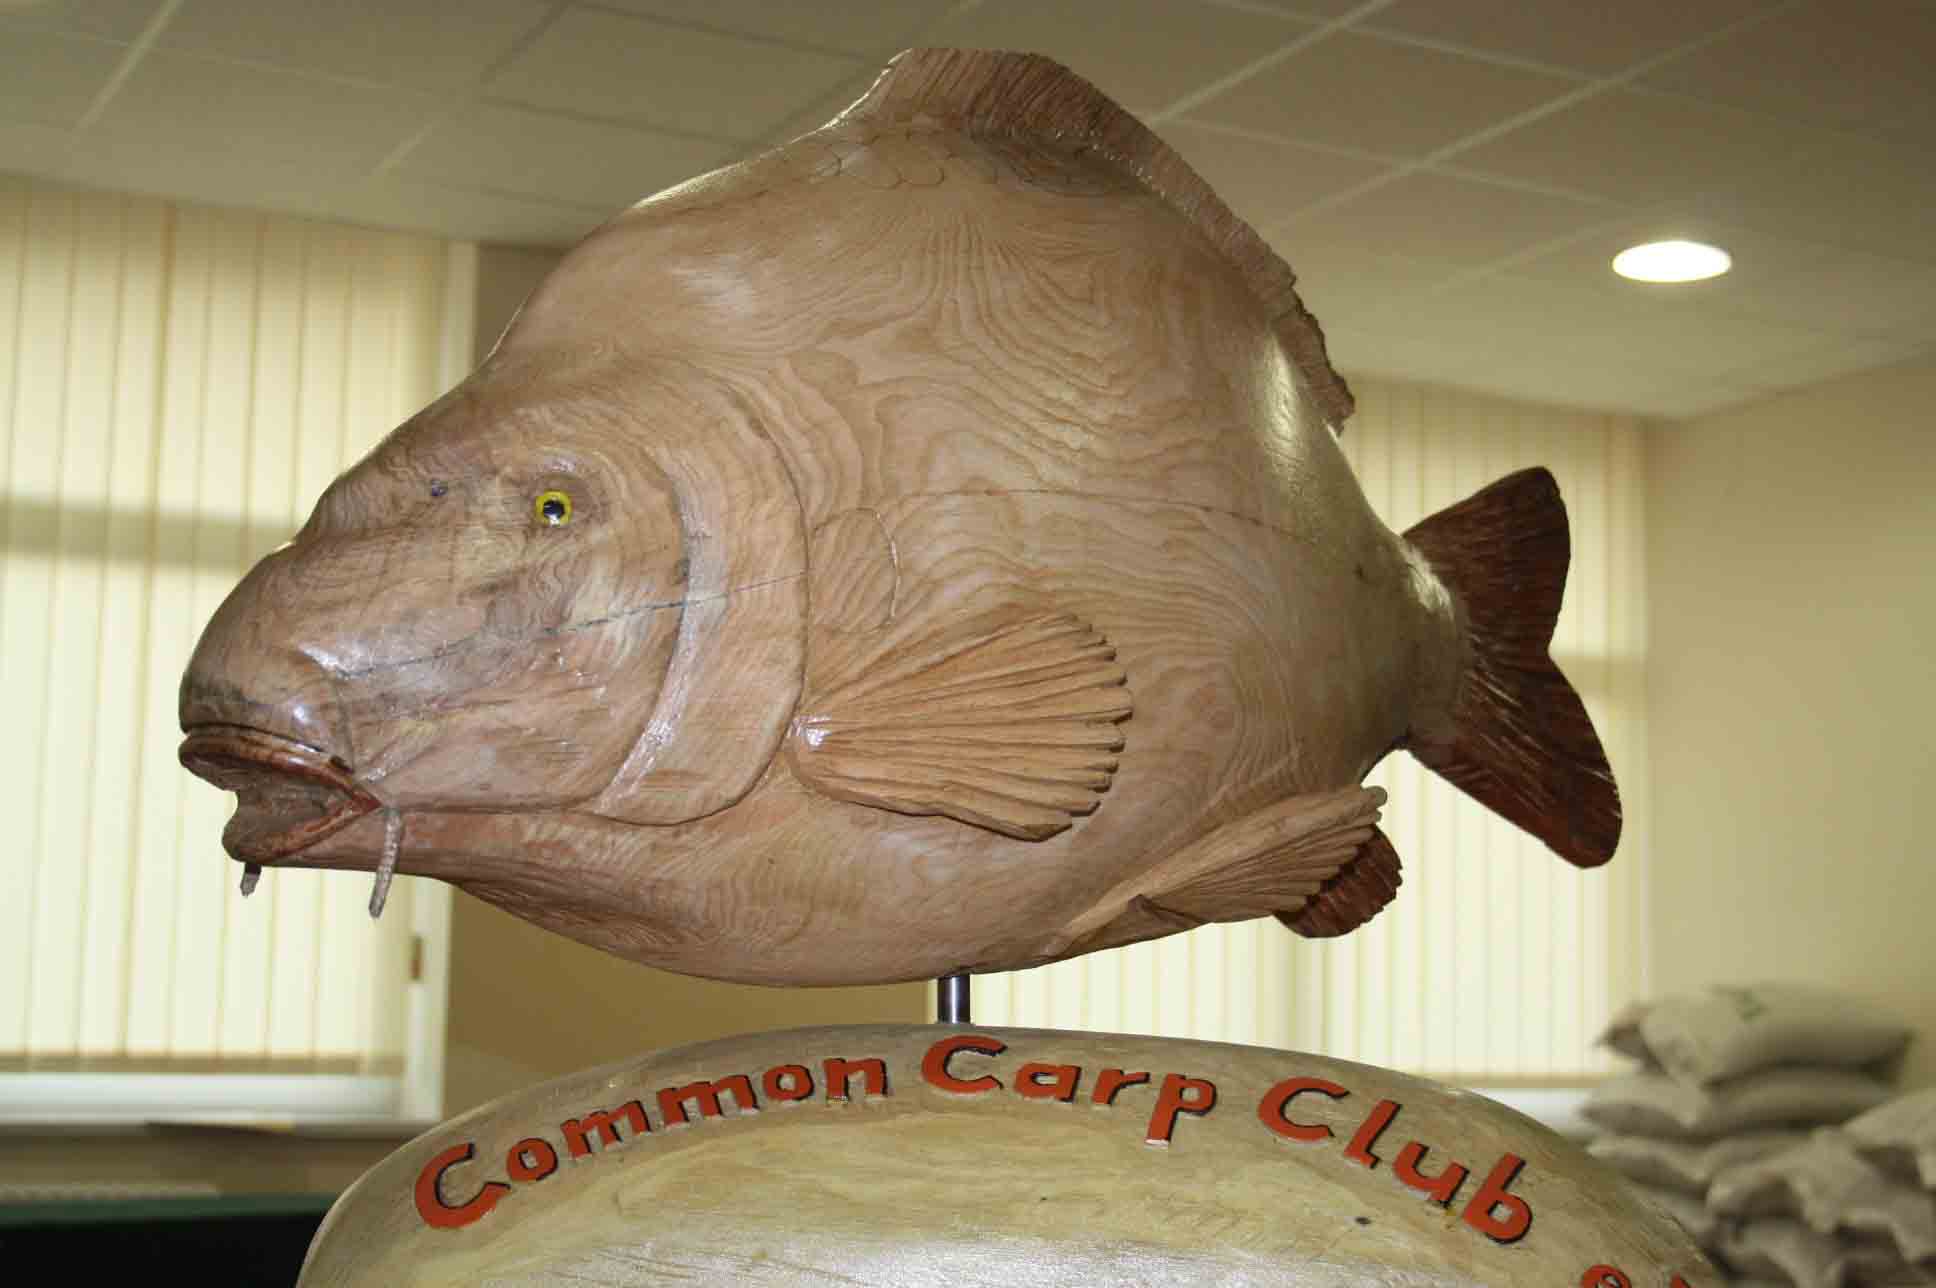 Common Carp Club